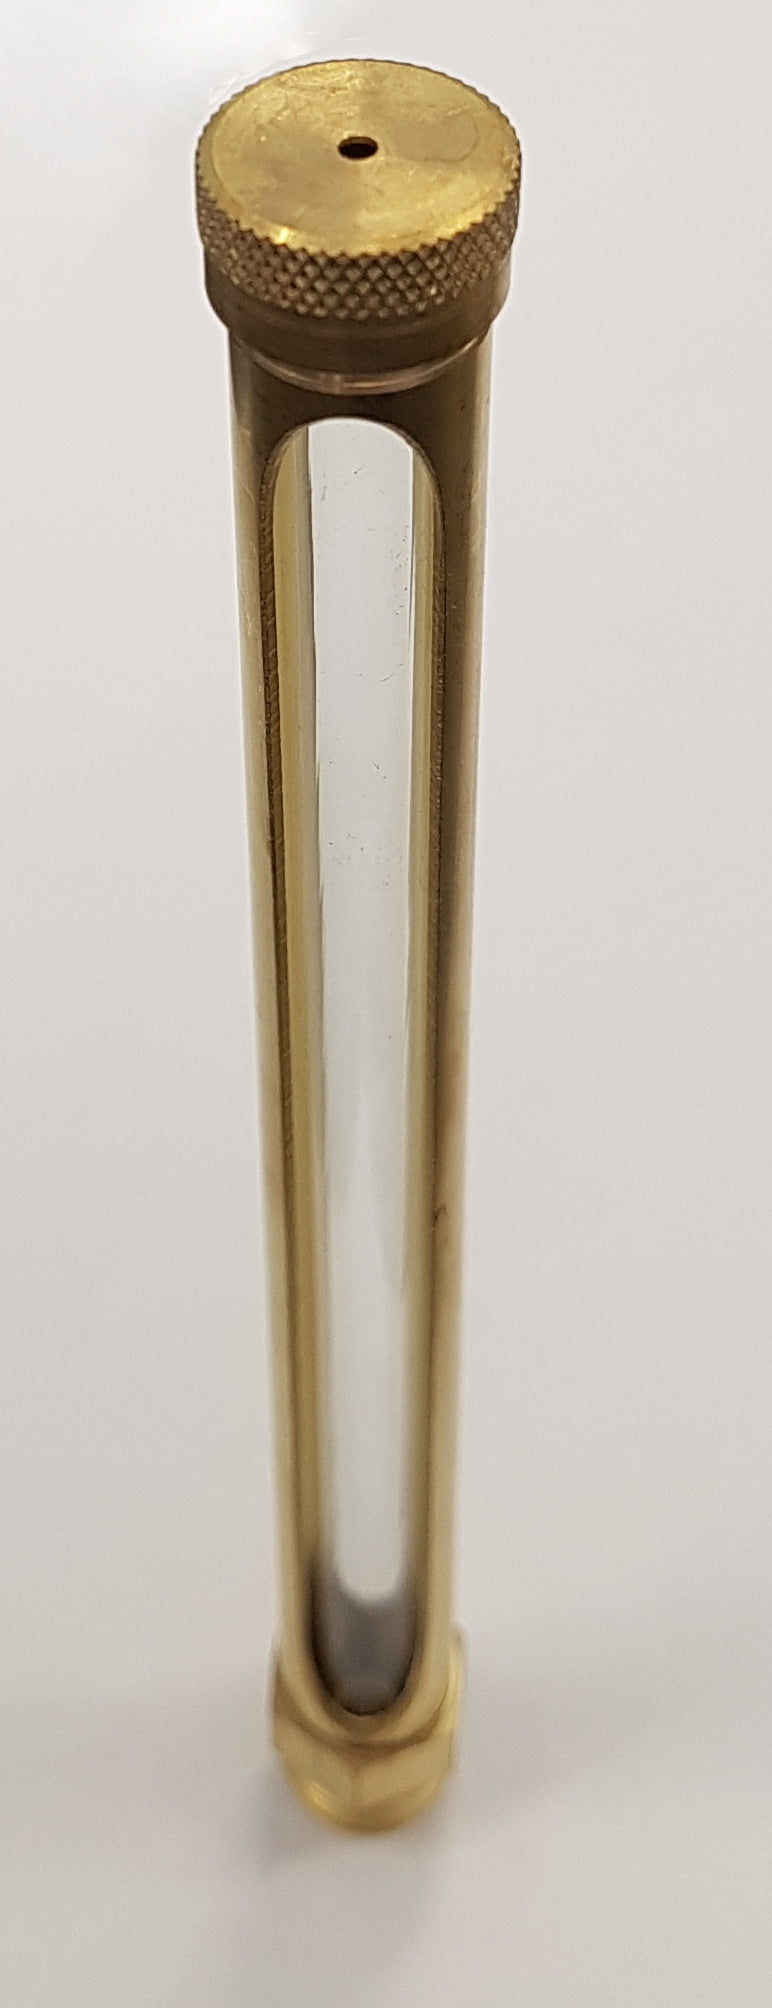 Brass straight oil position indicator type 226 - 60 x 3/8 BSP